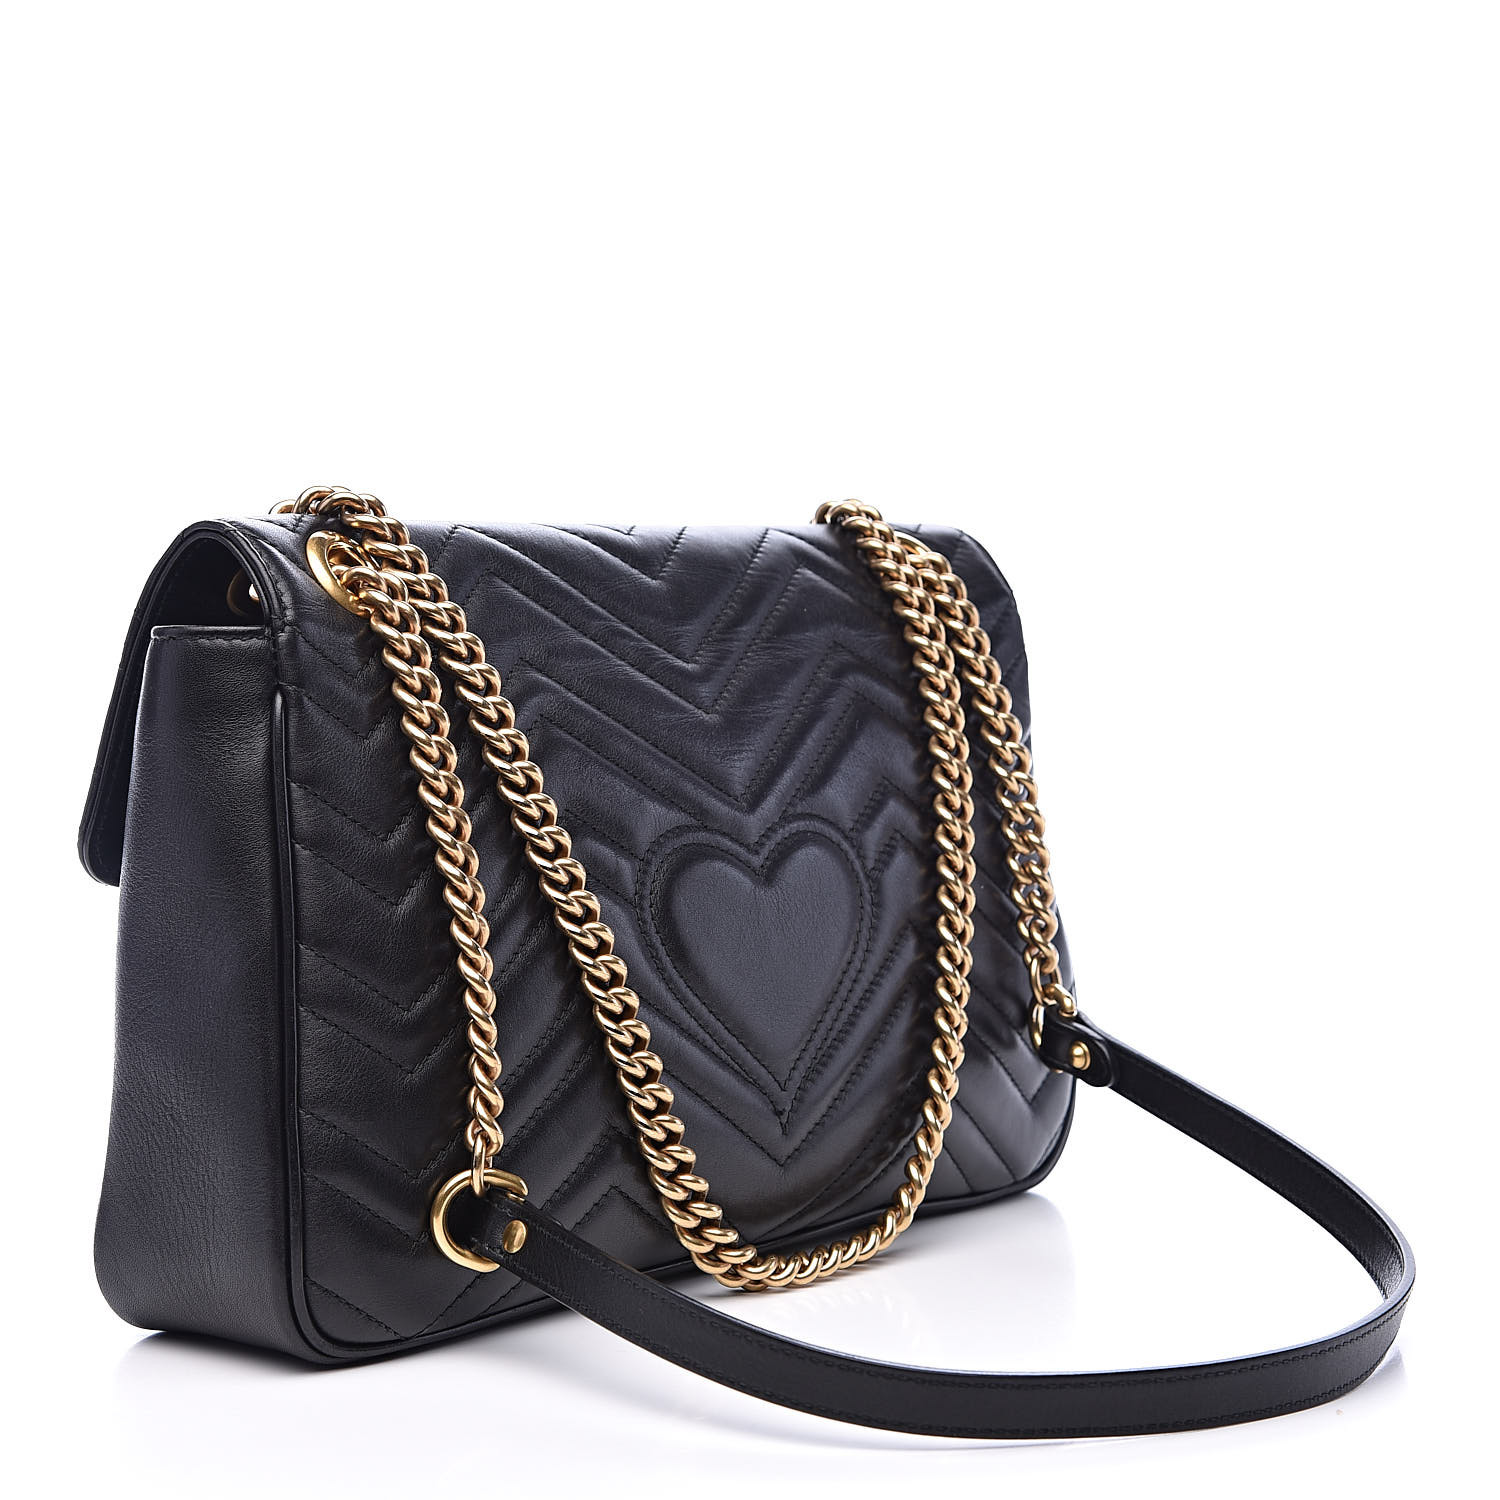 GUCCI Calfskin Matelasse Medium GG Marmont Shoulder Bag Black 518615